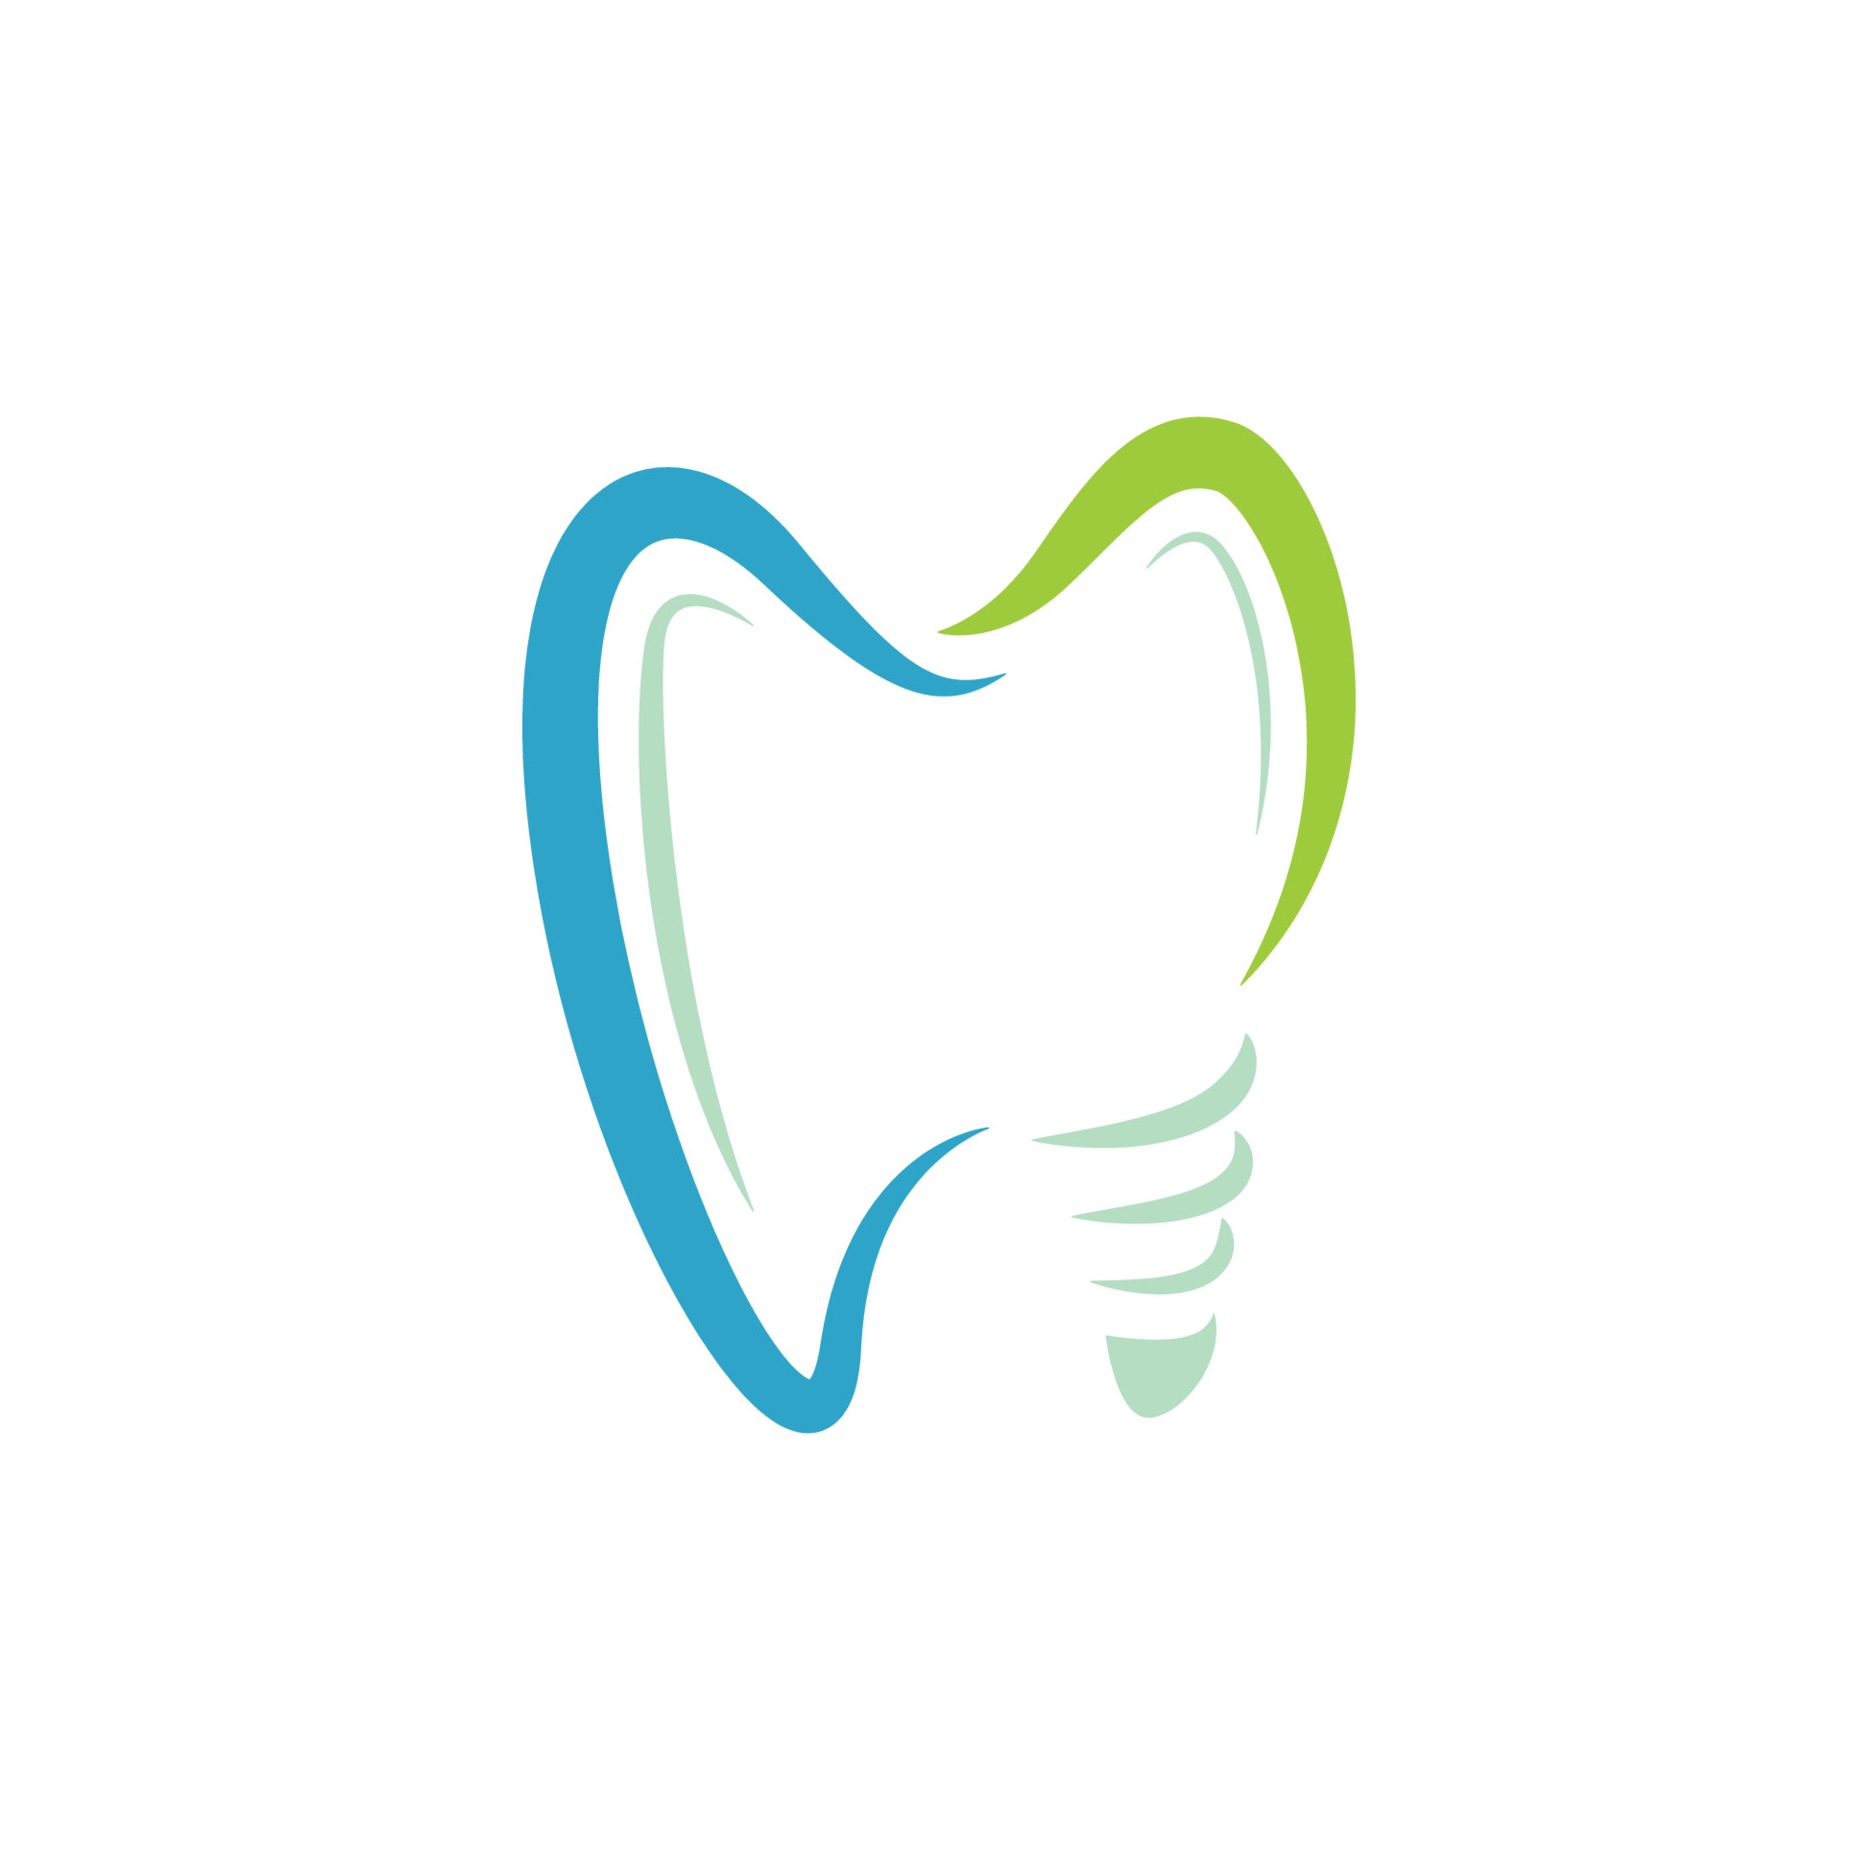 عصب کشی دندان سه کاناله با ترمیم